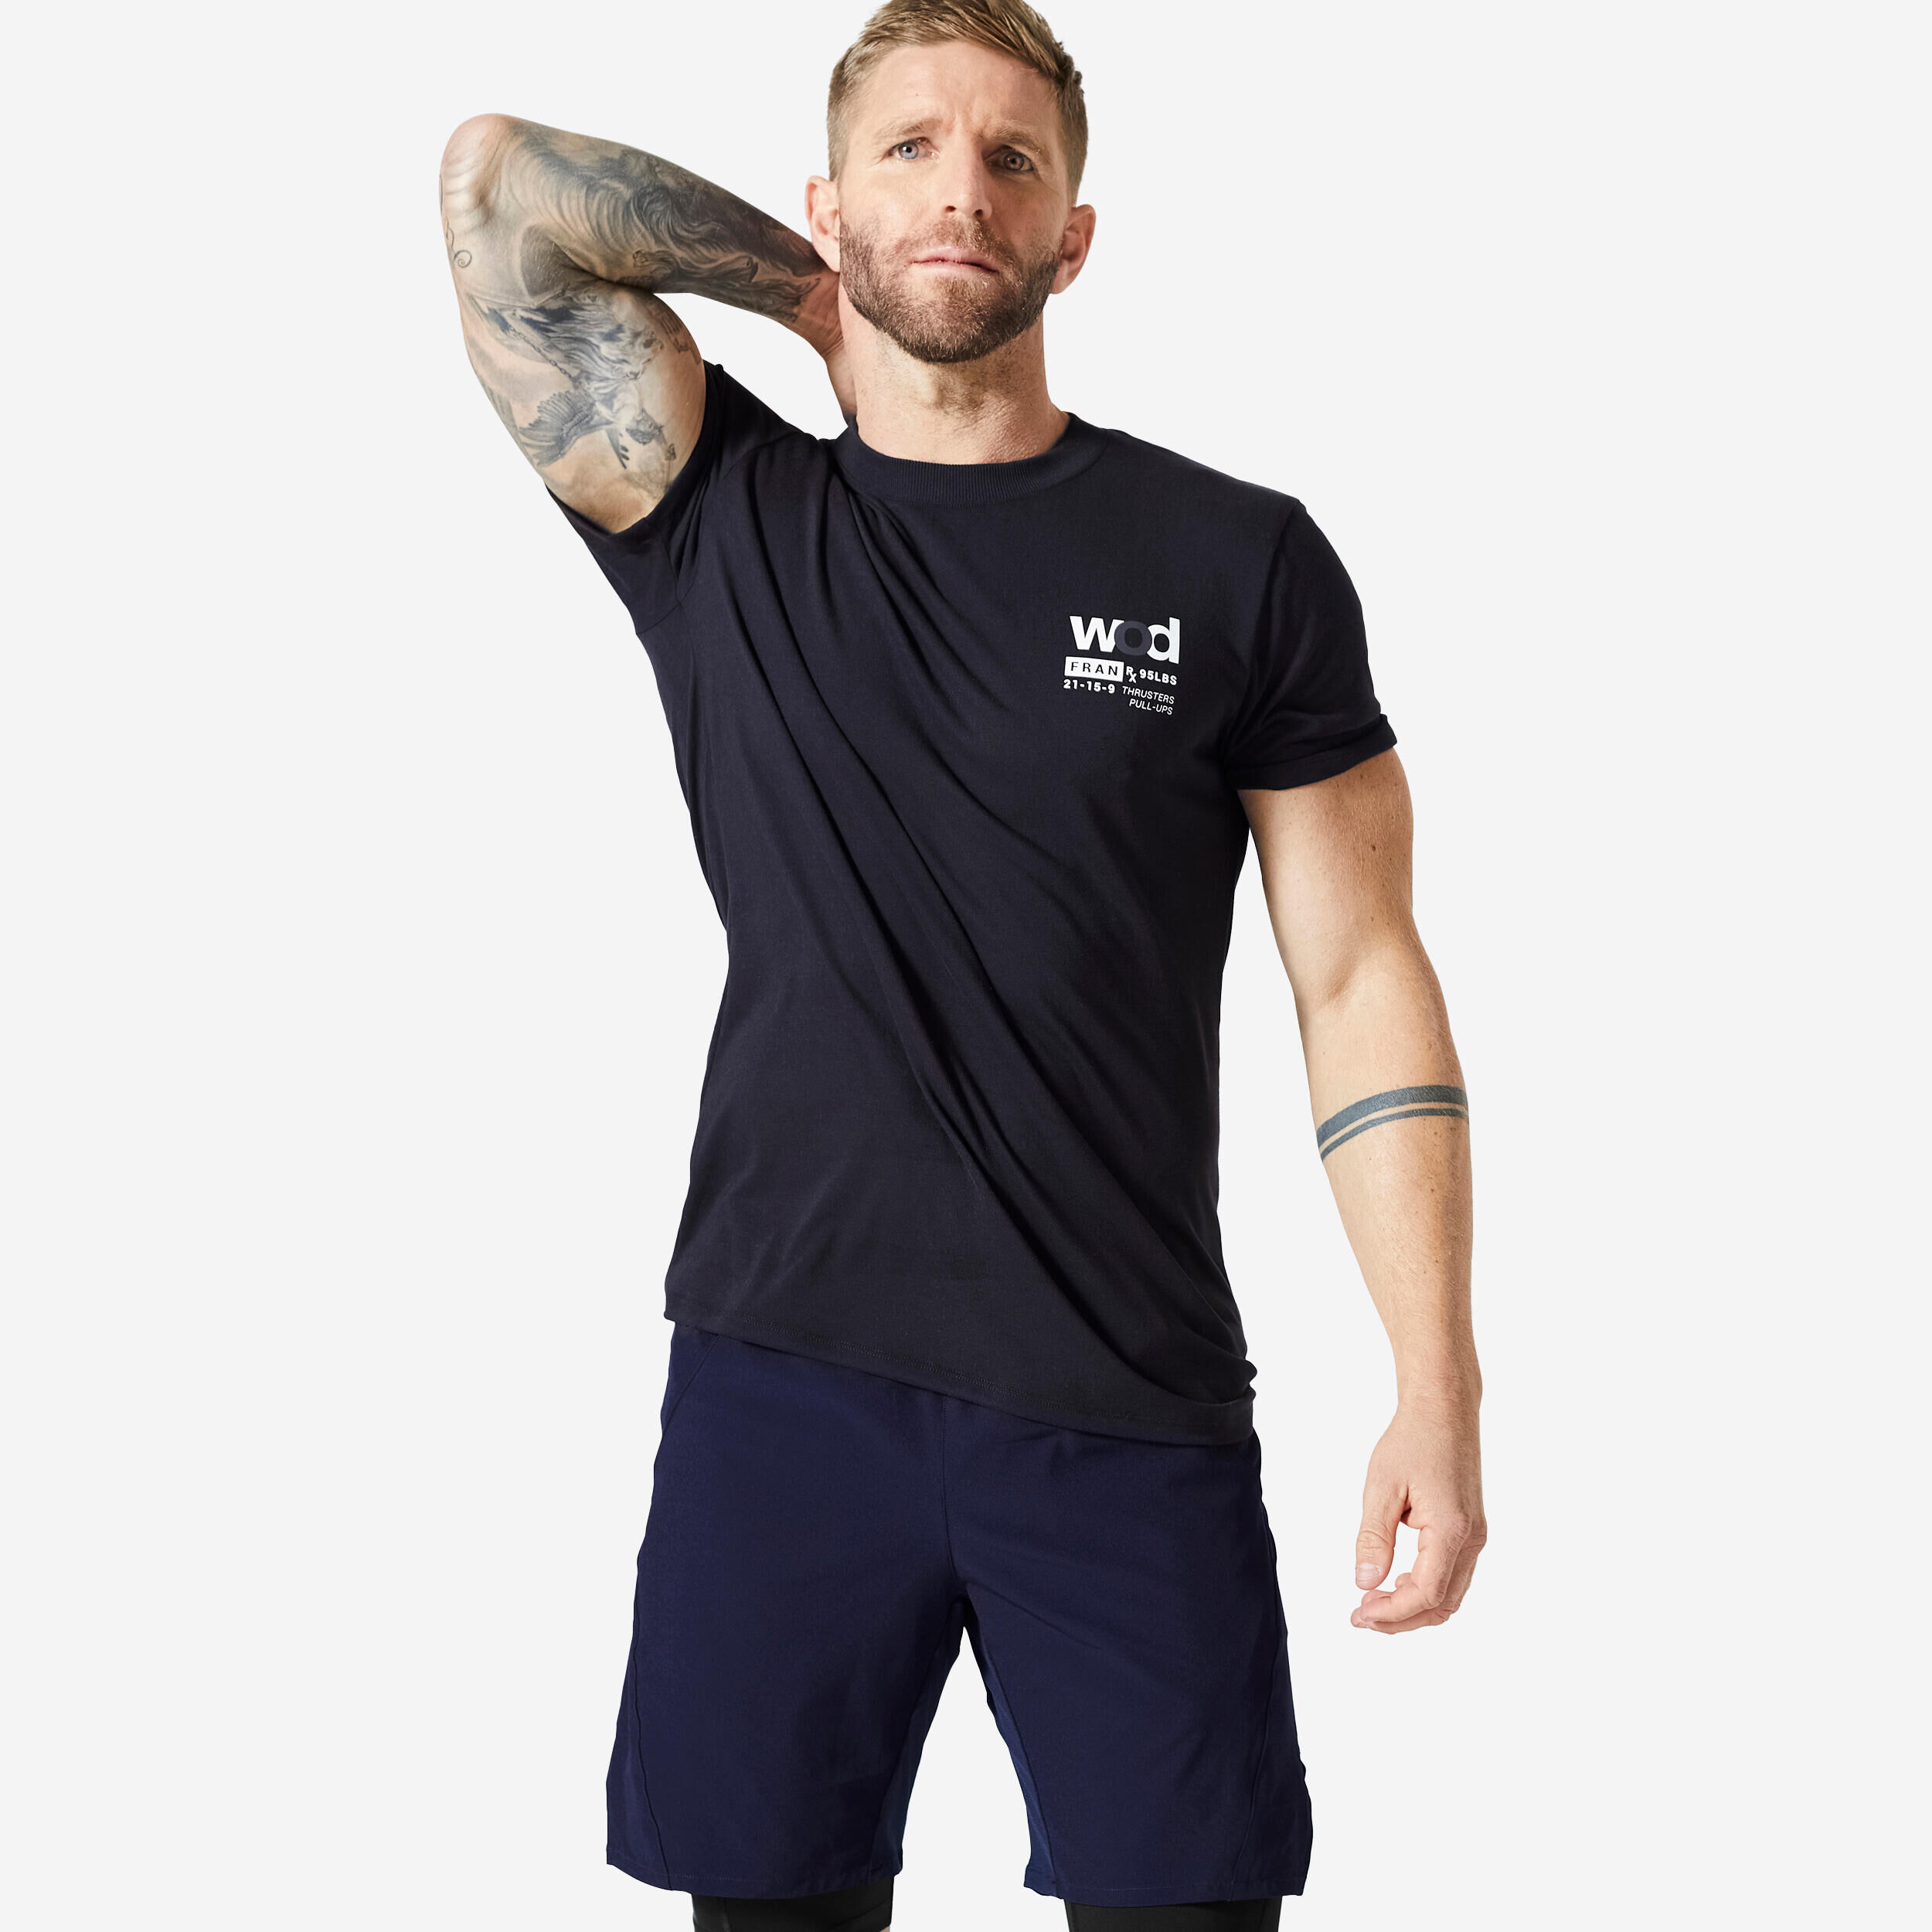 DOMYOS Men's Crew Neck Slim-Fit Soft Breathable Cross Training T-Shirt - Black